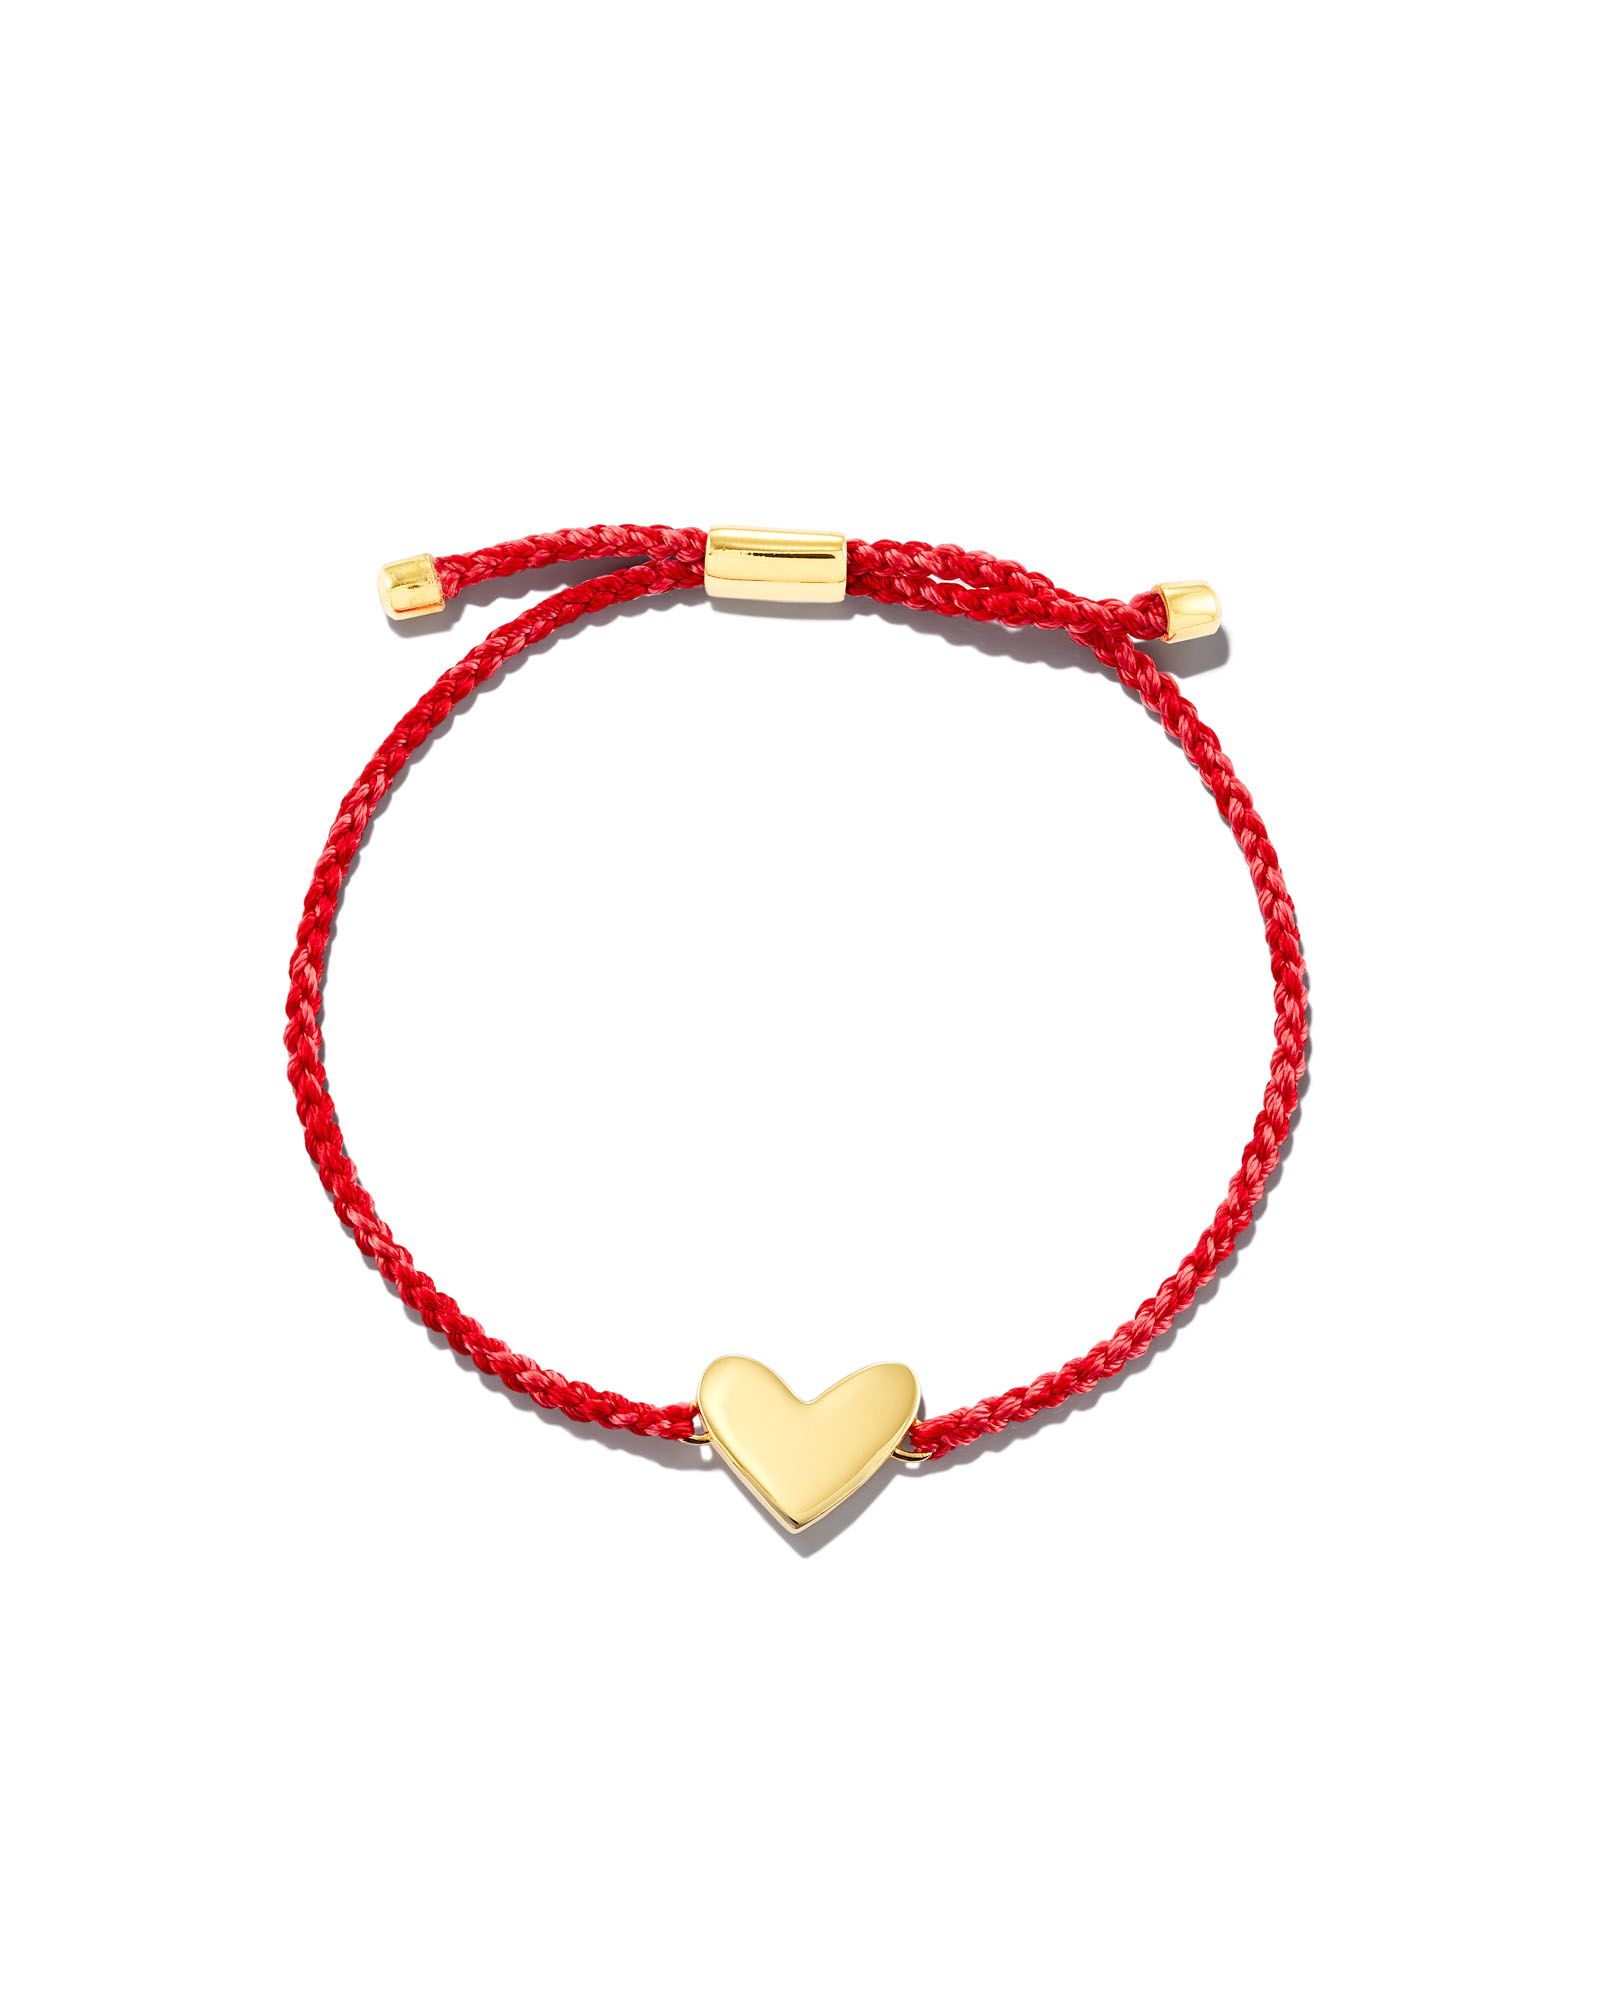 Ari Heart 18k Yellow Gold Vermeil Corded Bracelet in Red Multi | Kendra Scott | Kendra Scott